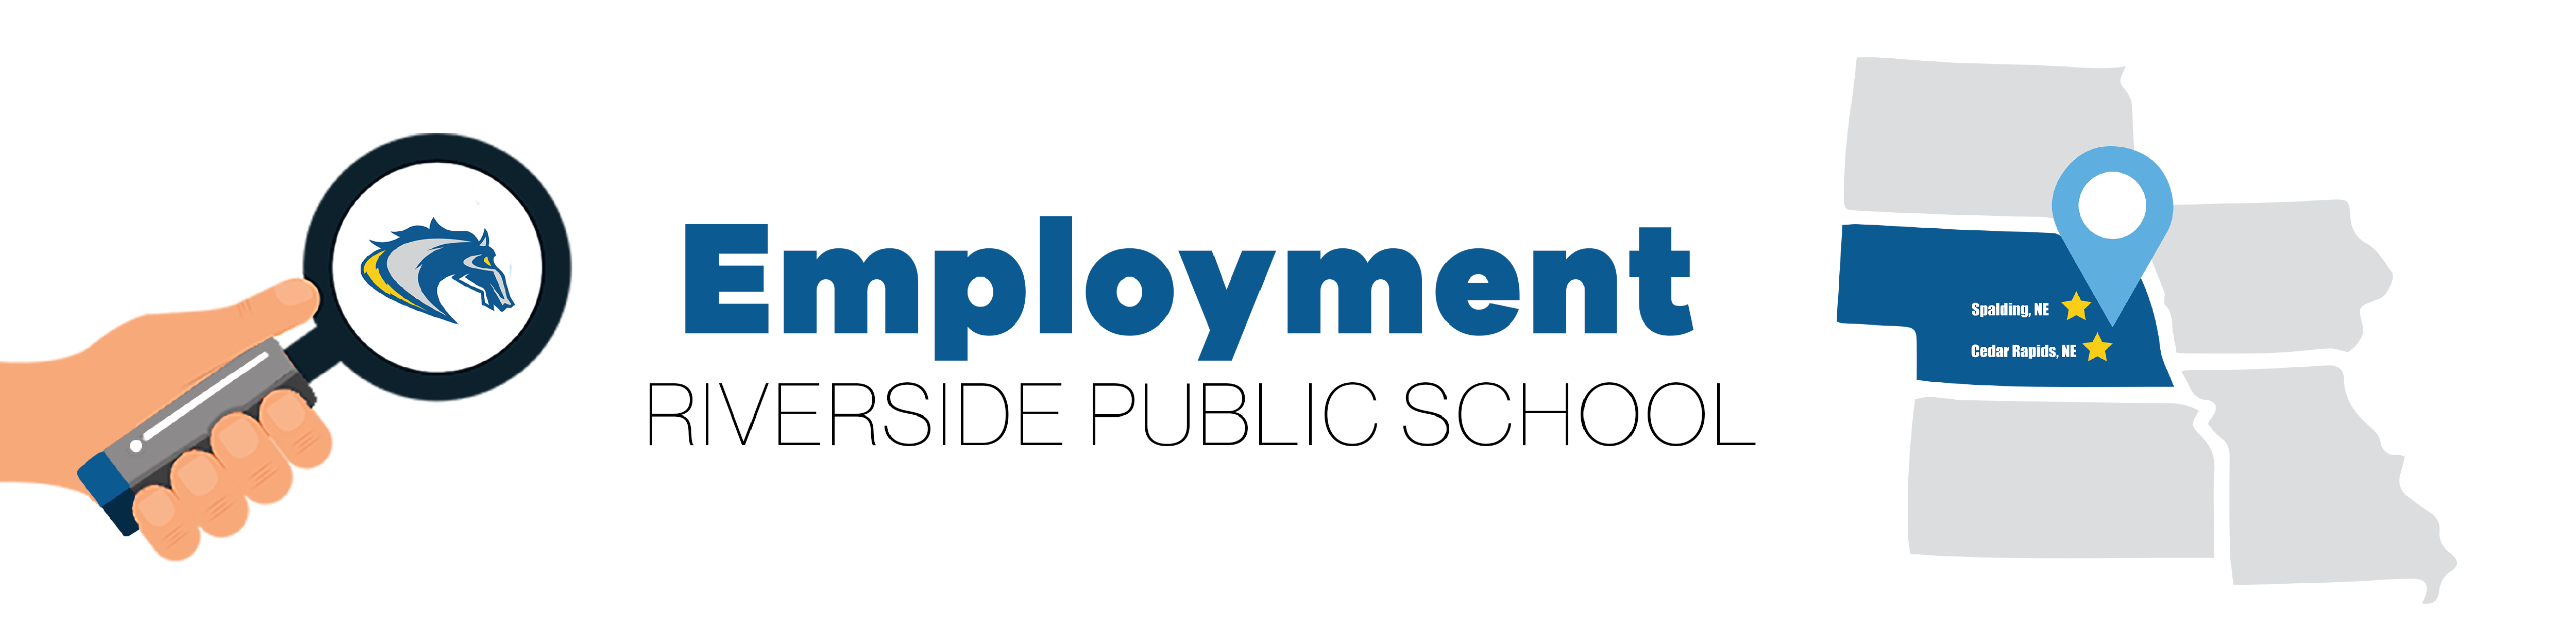 employment riverside public school